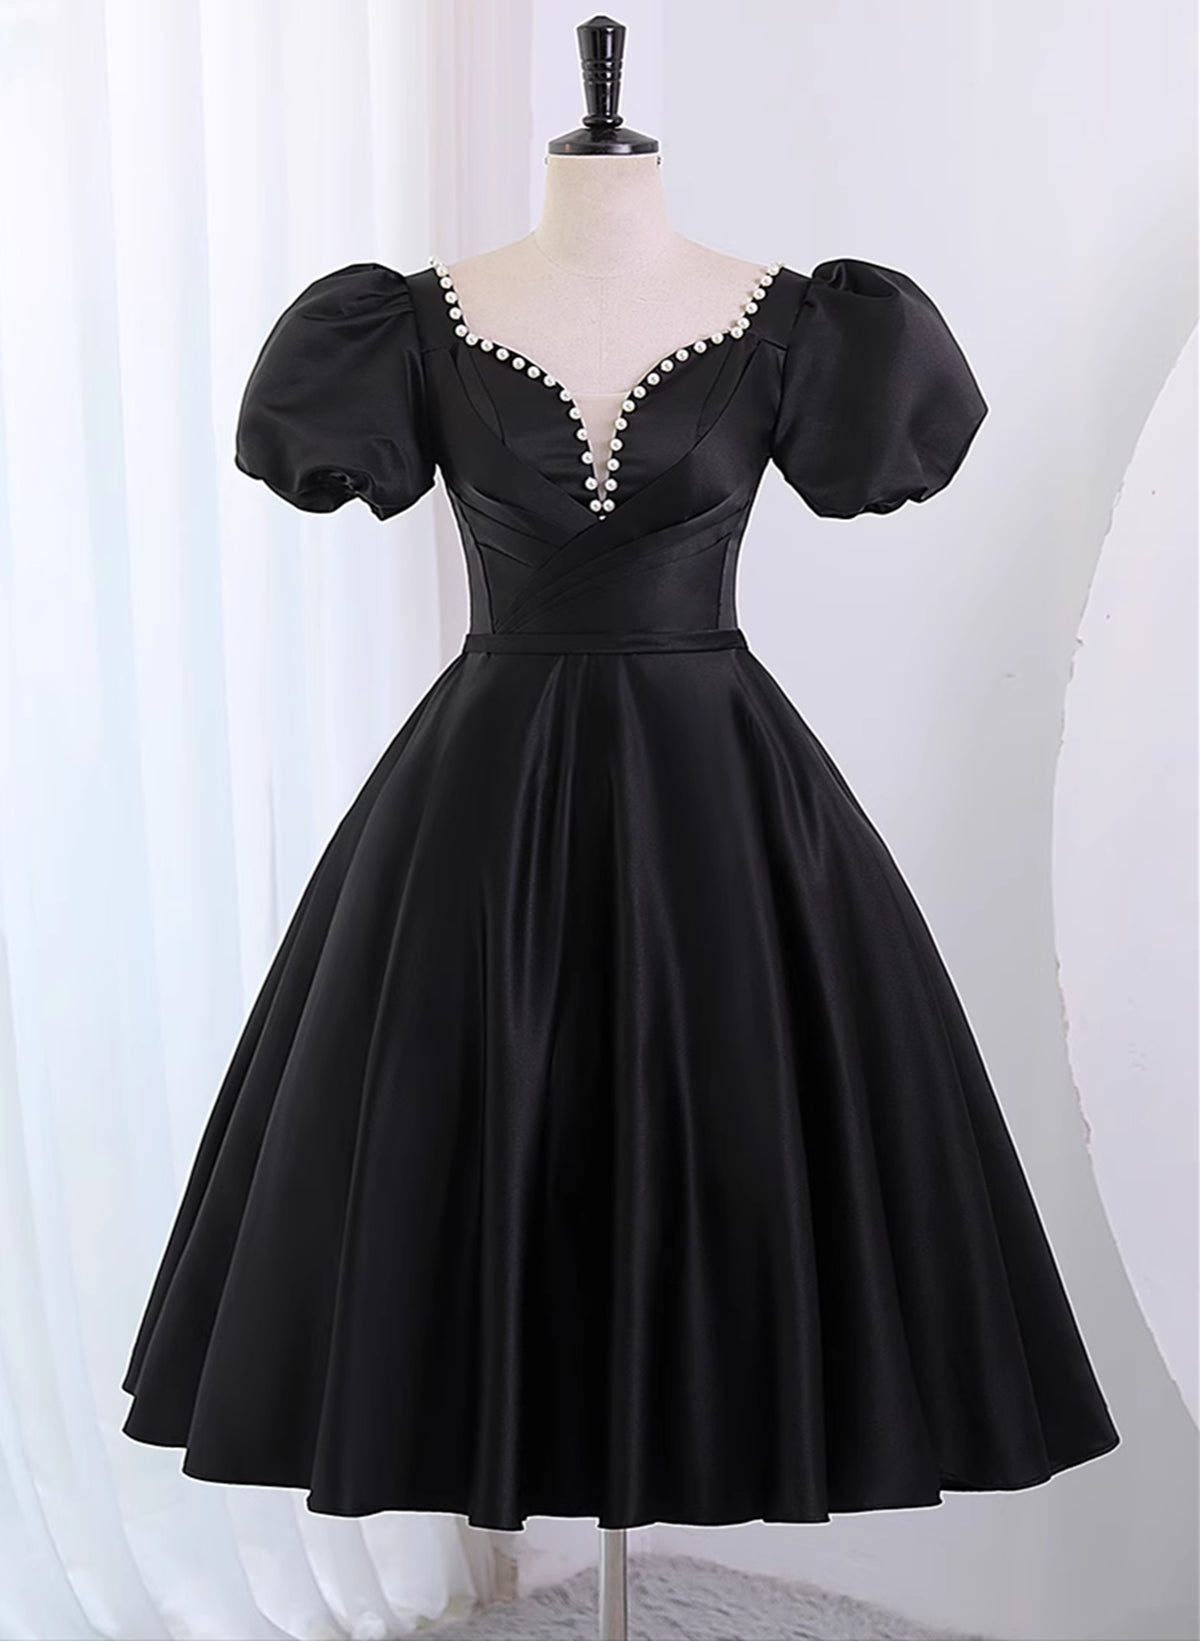 Black Satin Short Sleeves Knee Length Party Dress, Black Homecoming Dress